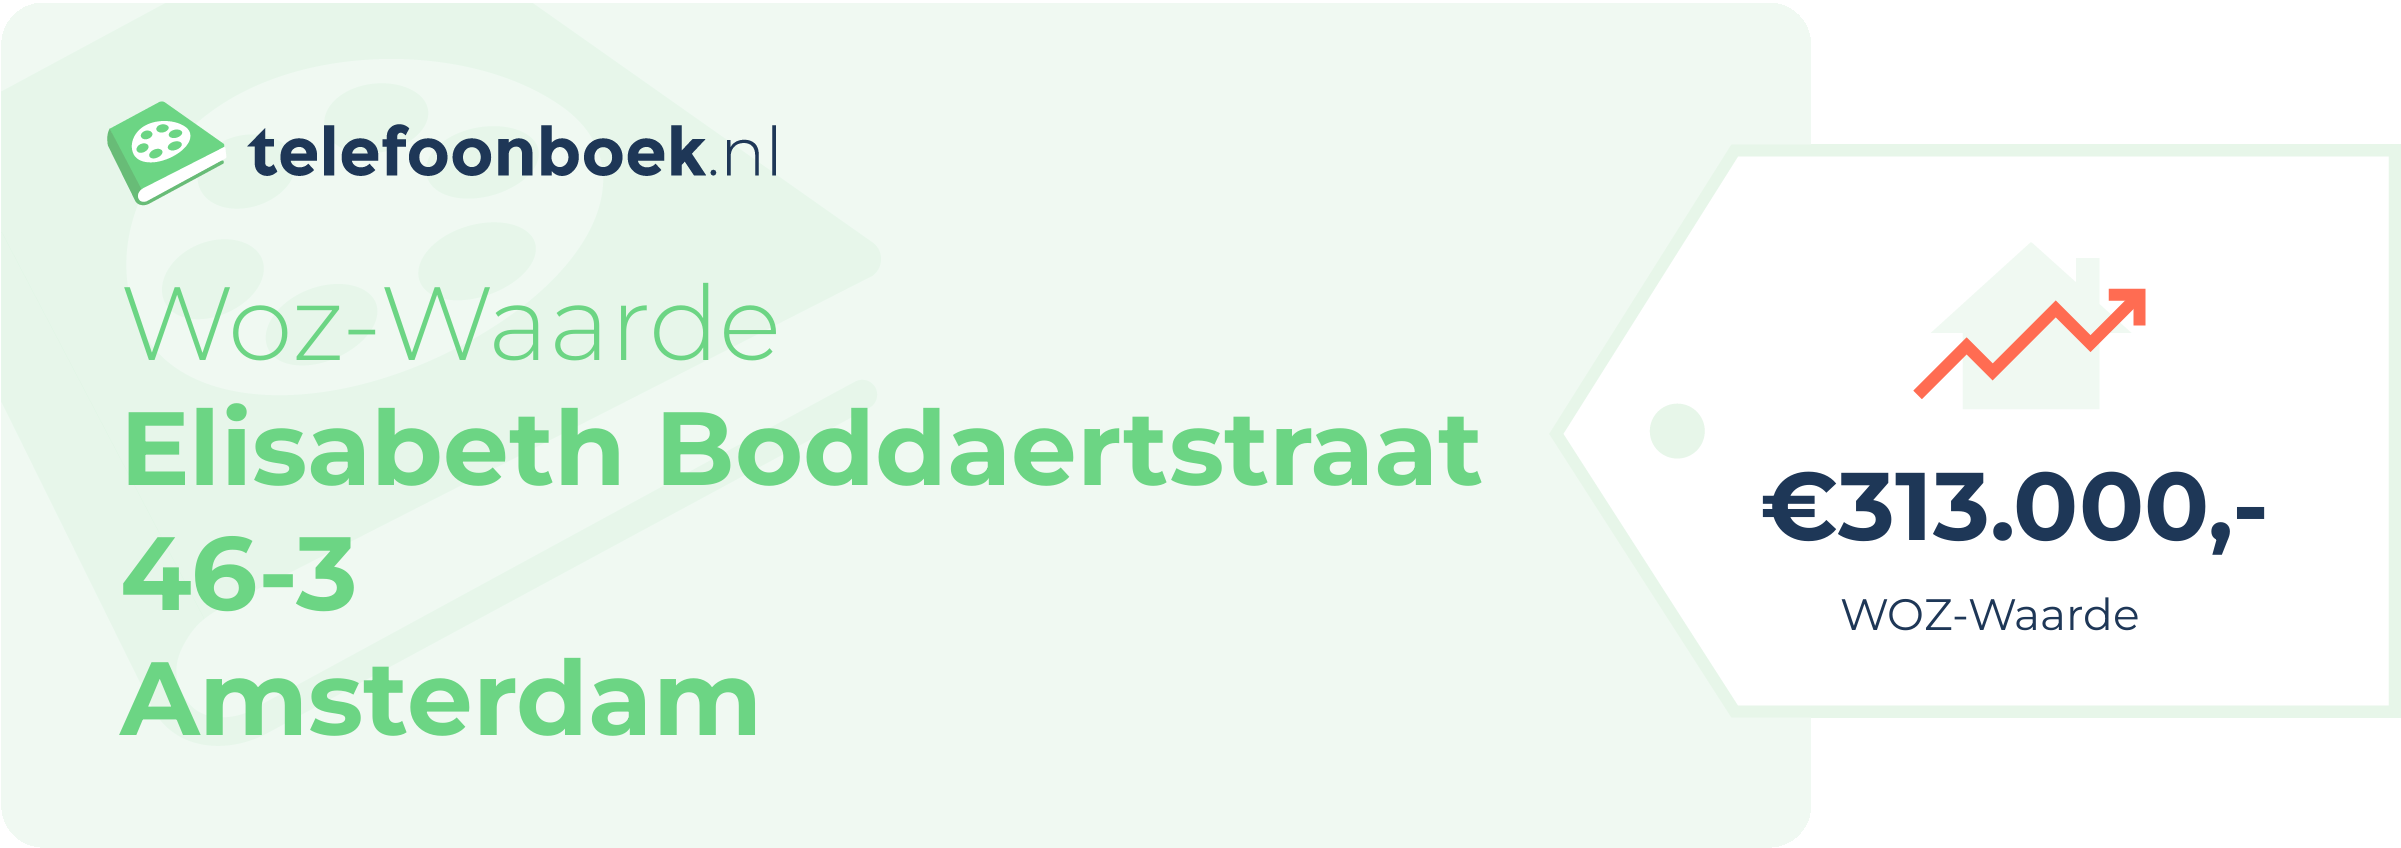 WOZ-waarde Elisabeth Boddaertstraat 46-3 Amsterdam